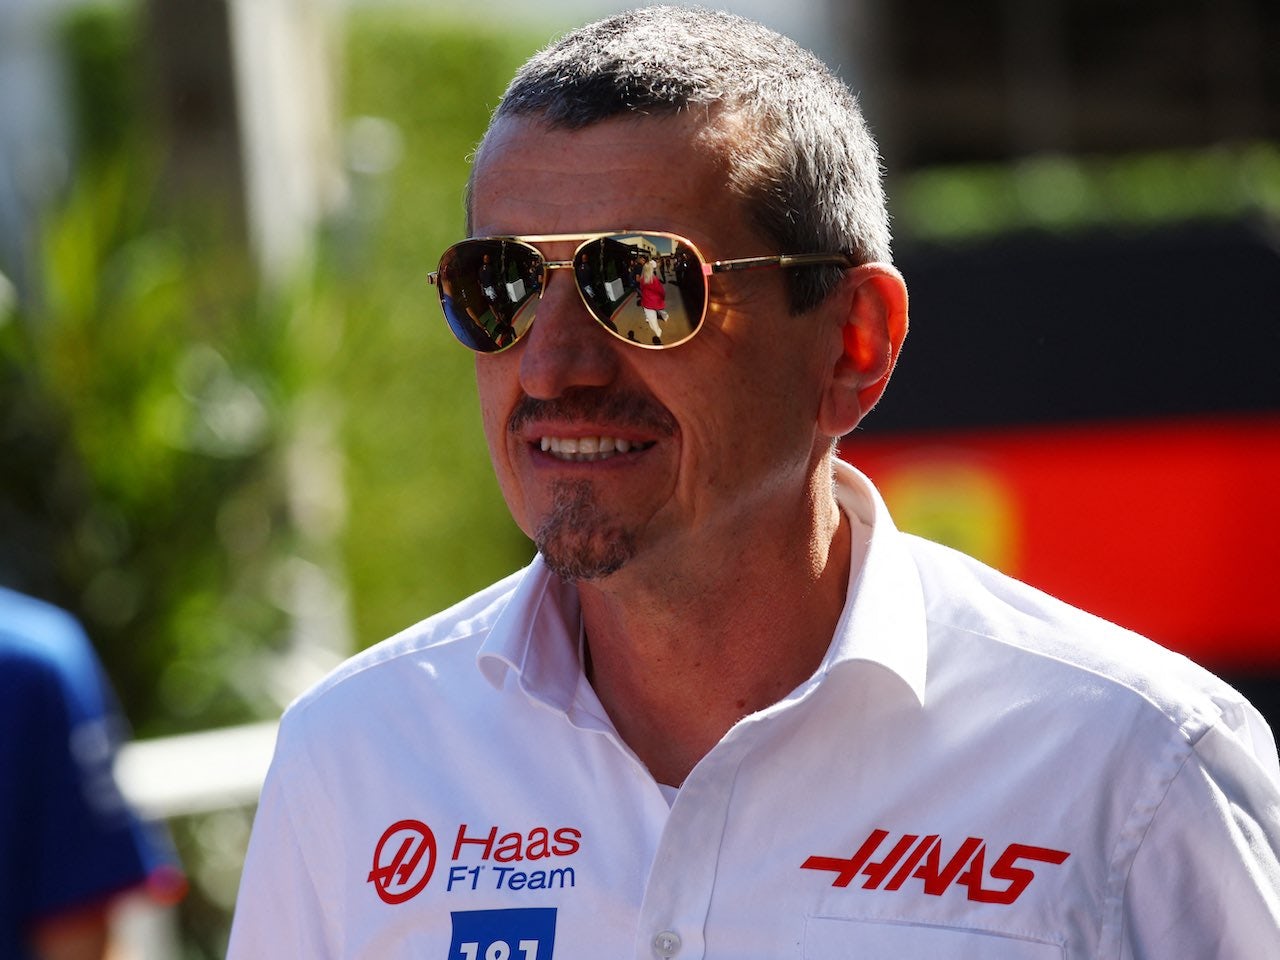 Haas sponsor won't push for Schumacher seat